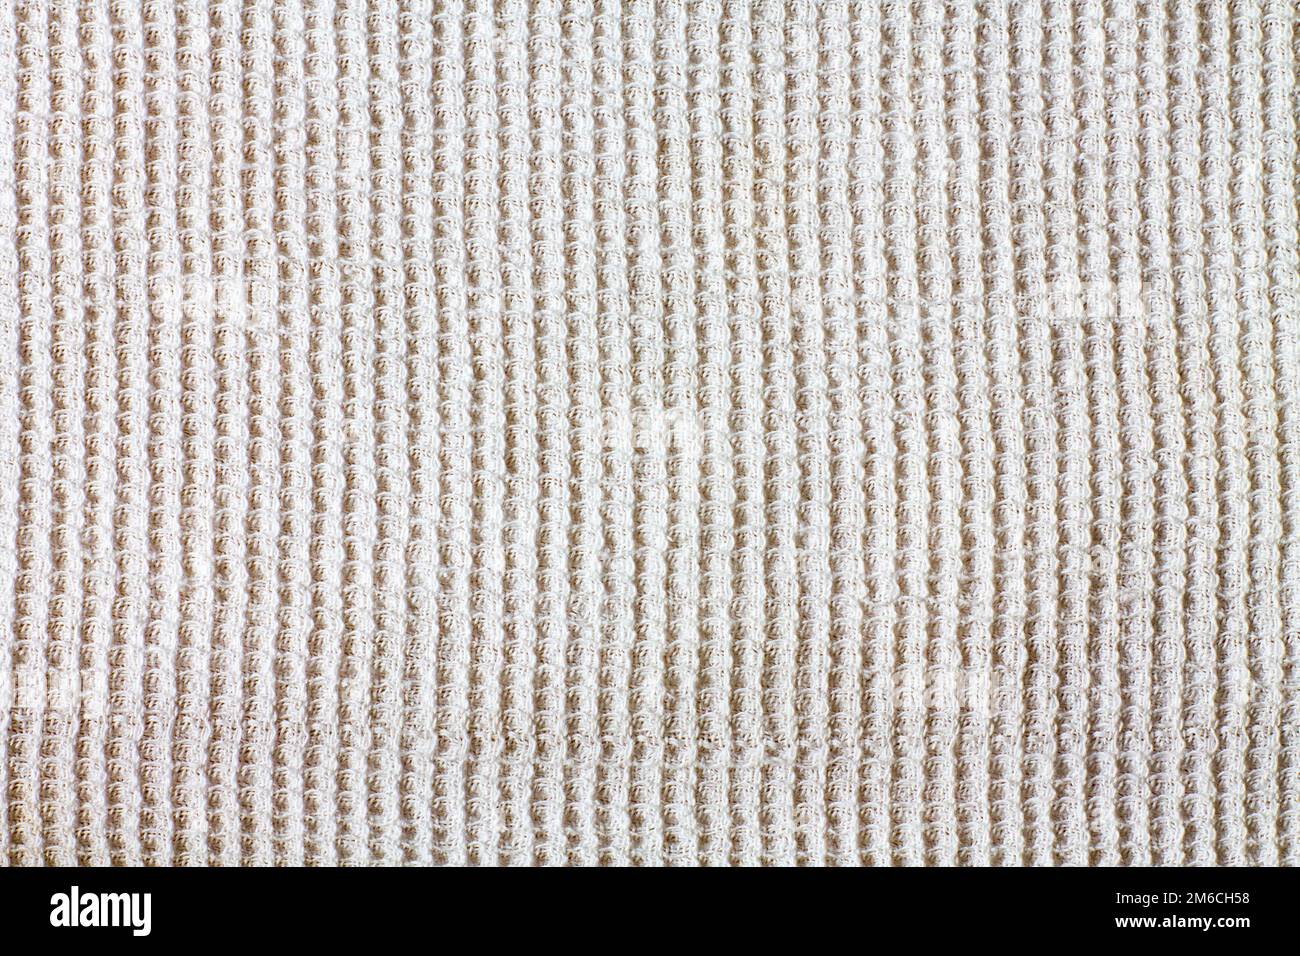 Texture of white cotton fabric Stock Photo